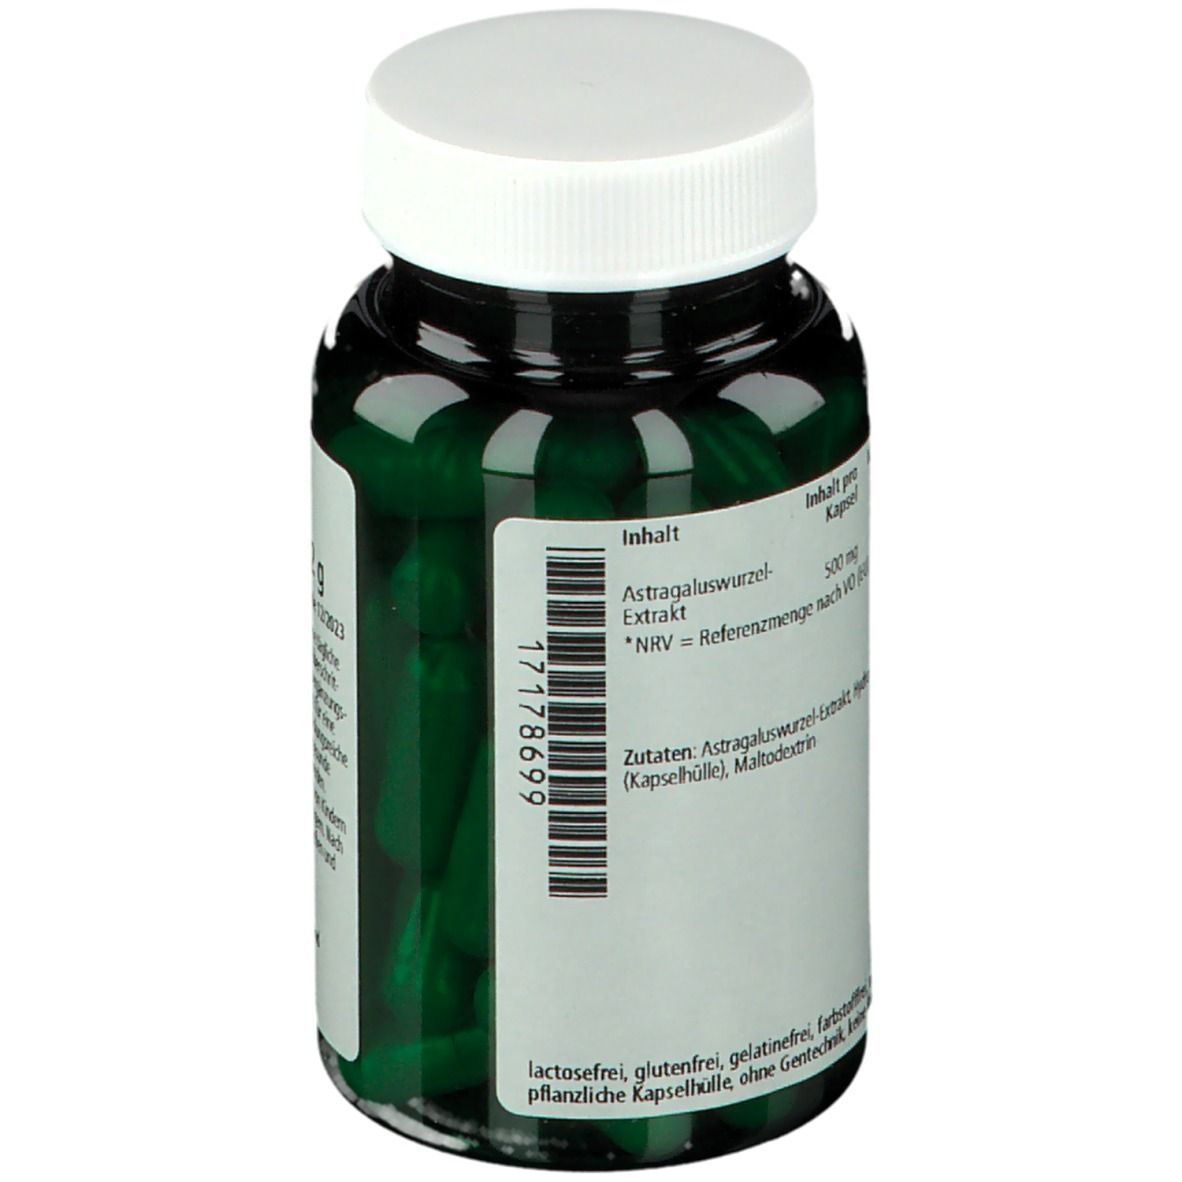 green line ASTRAGALUS 500 mg EXTRAKT